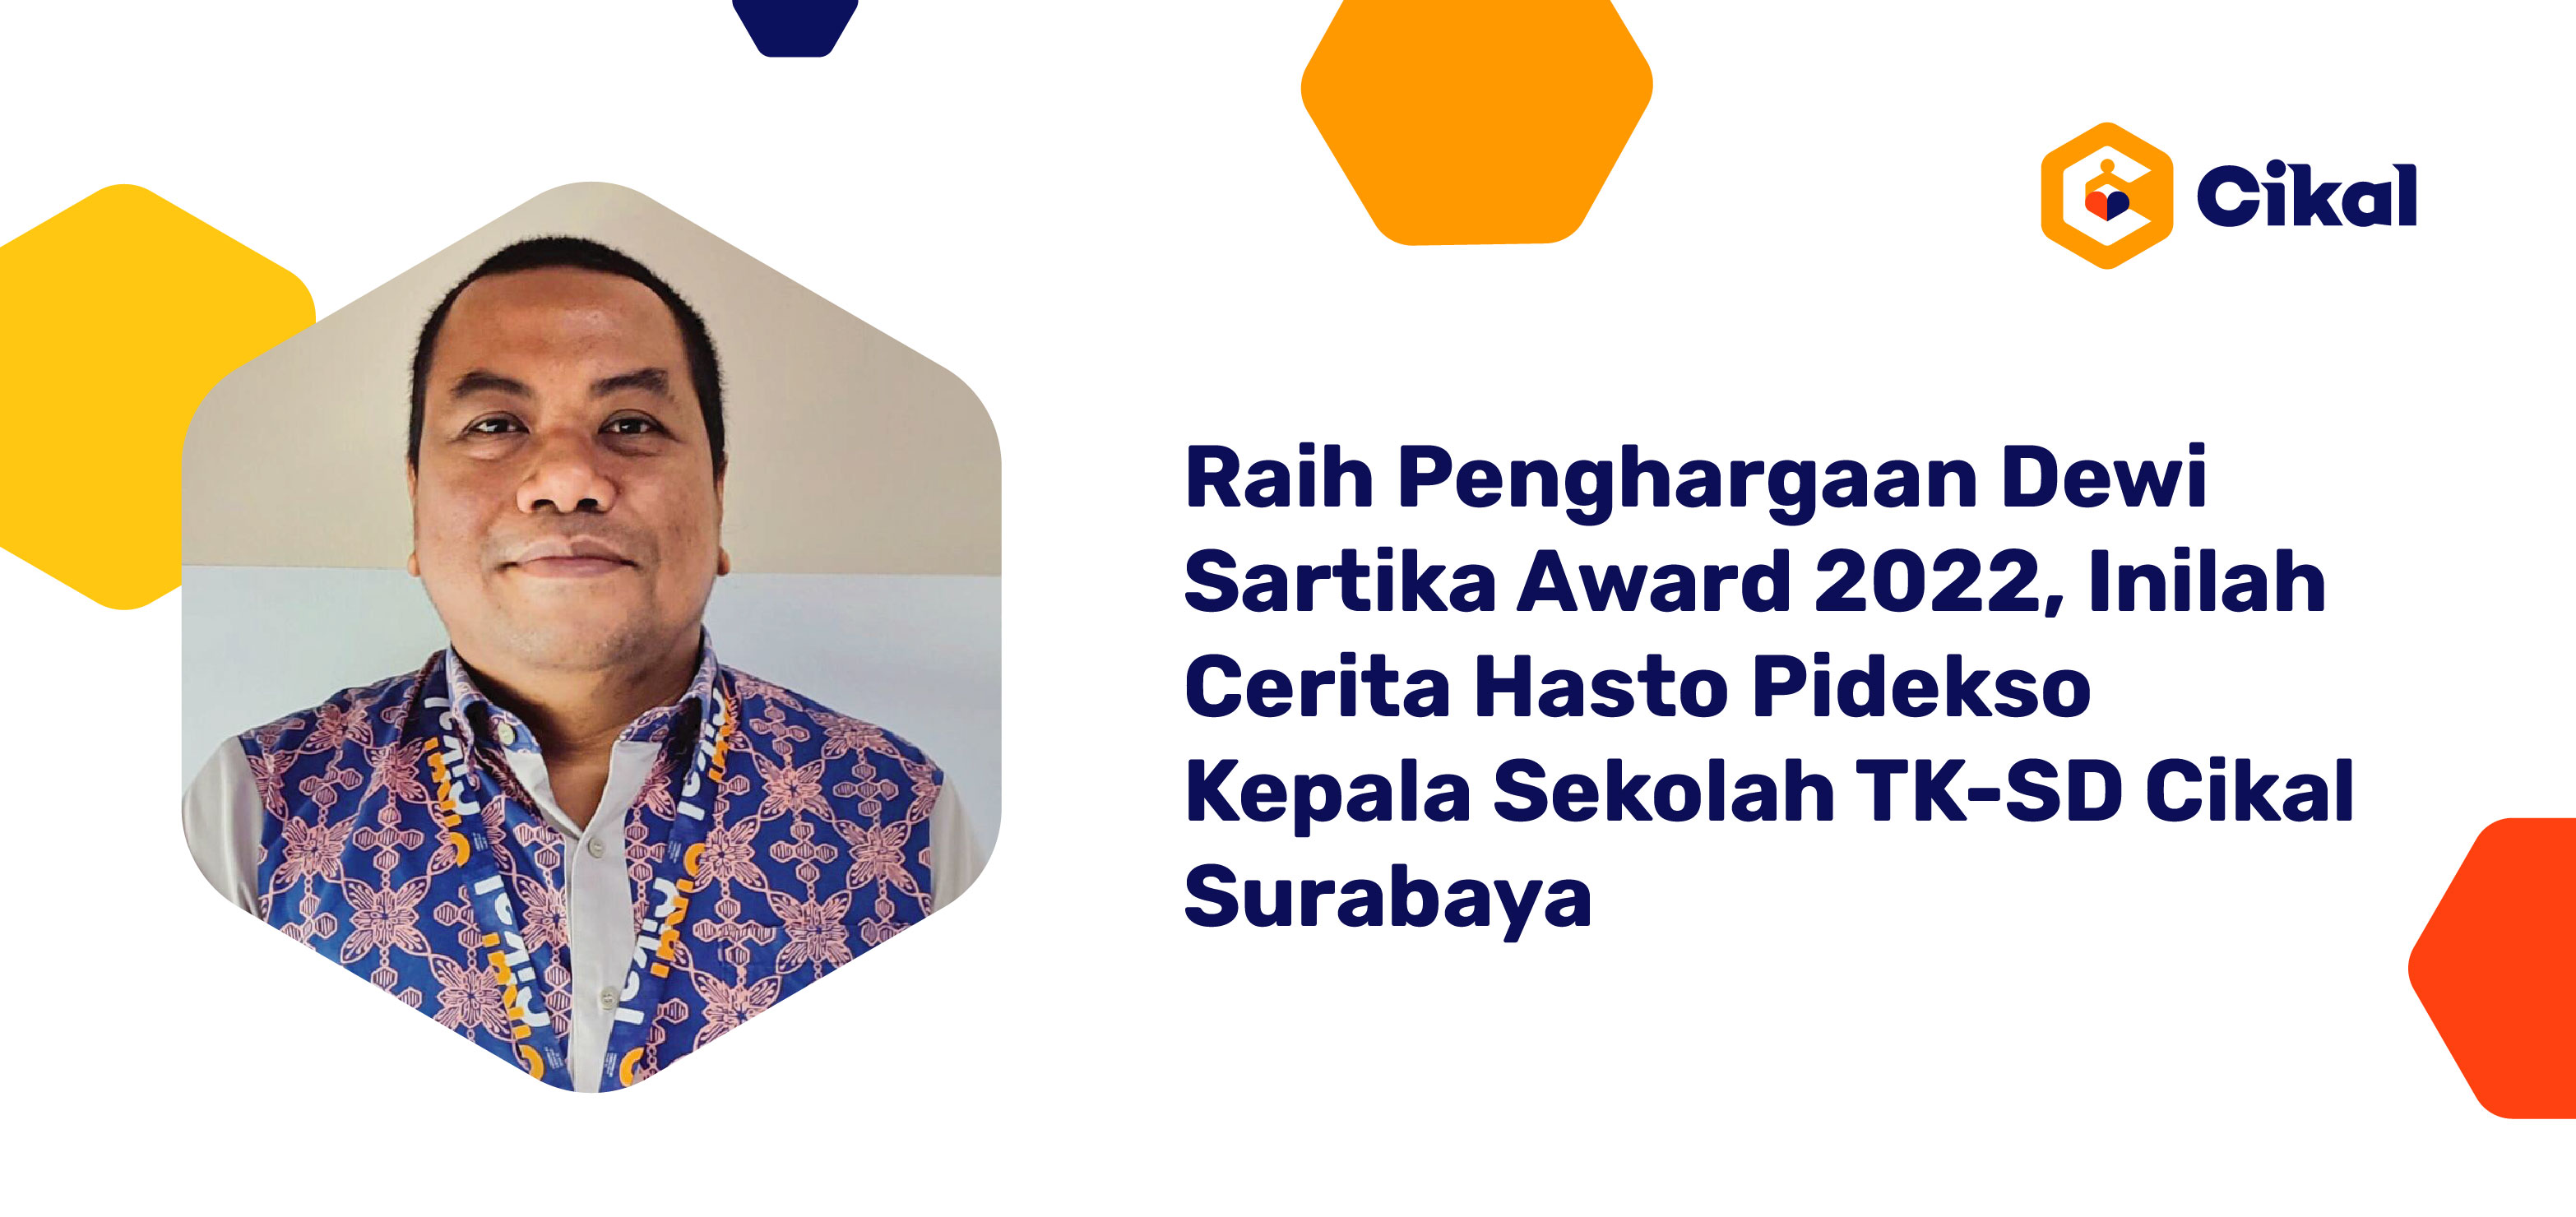 Raih Penghargaan Dewi Sartika Award 2022, Inilah Cerita Hasto Pidekso Kepala Sekolah TK-SD Cikal Surabaya 